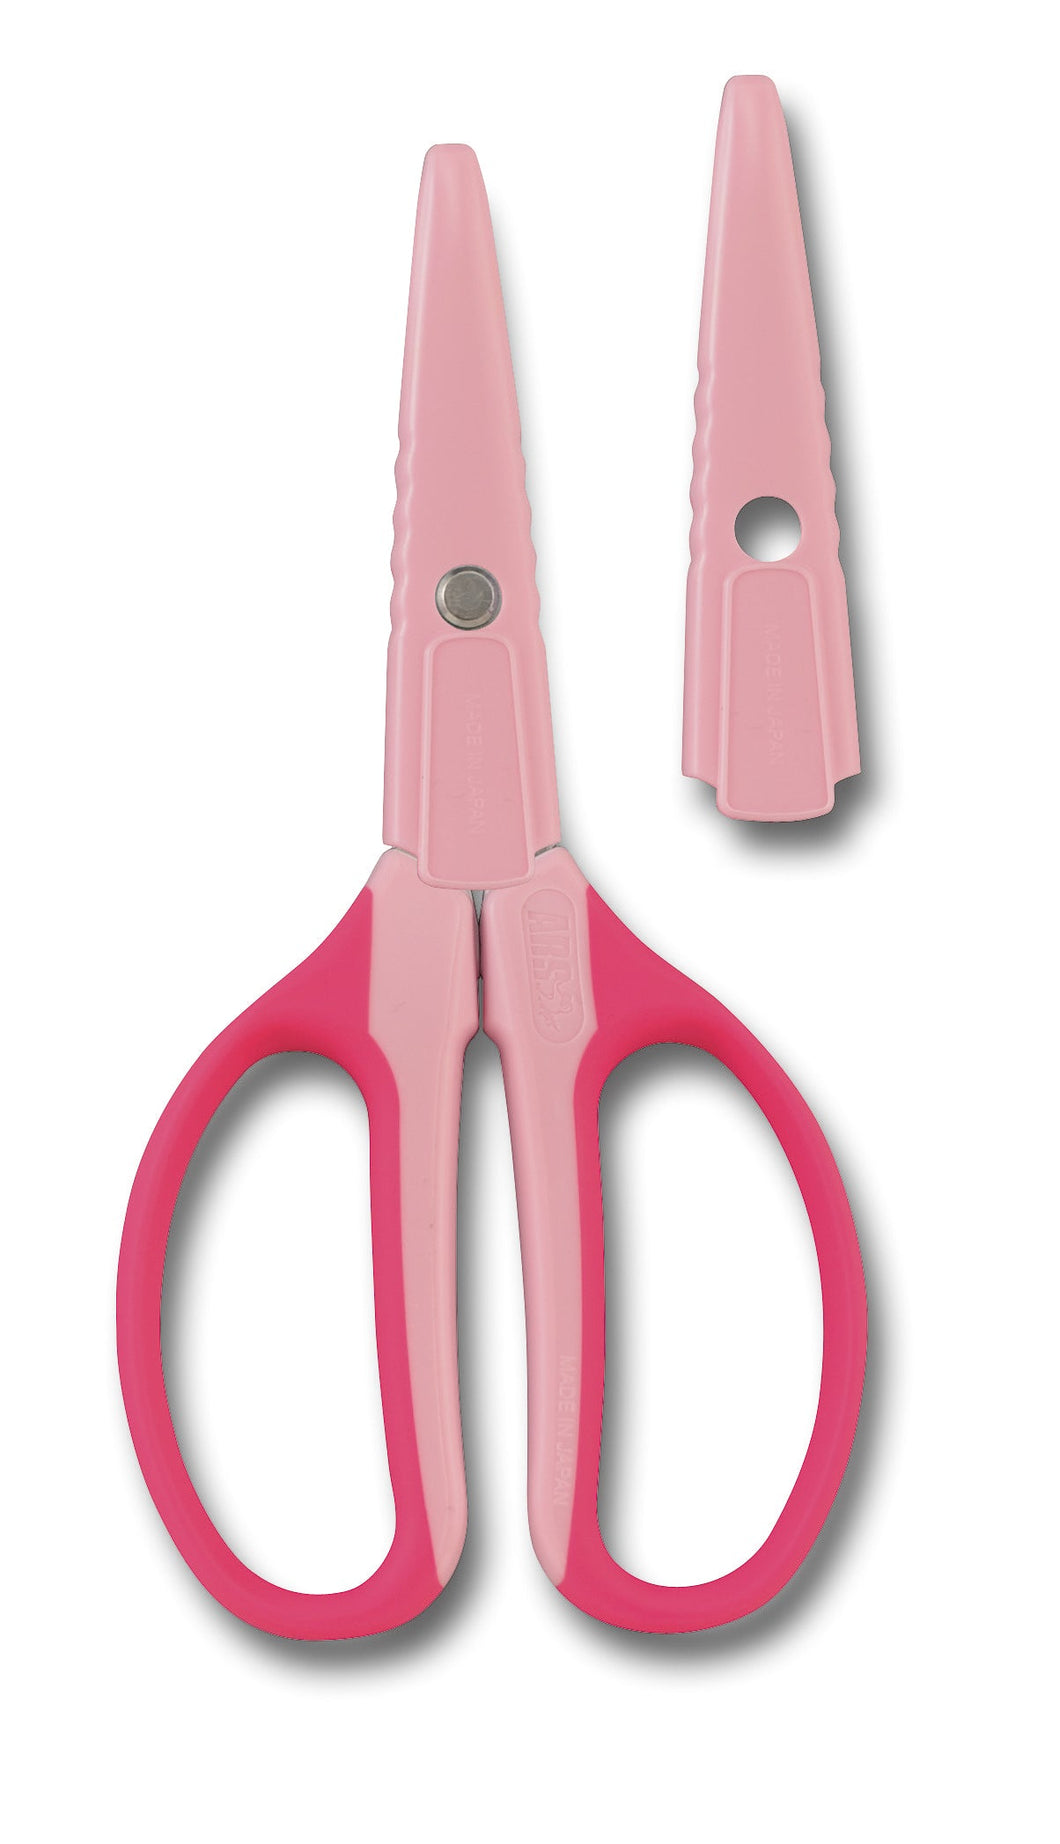 ARS Craft Scissors - Pink Handles